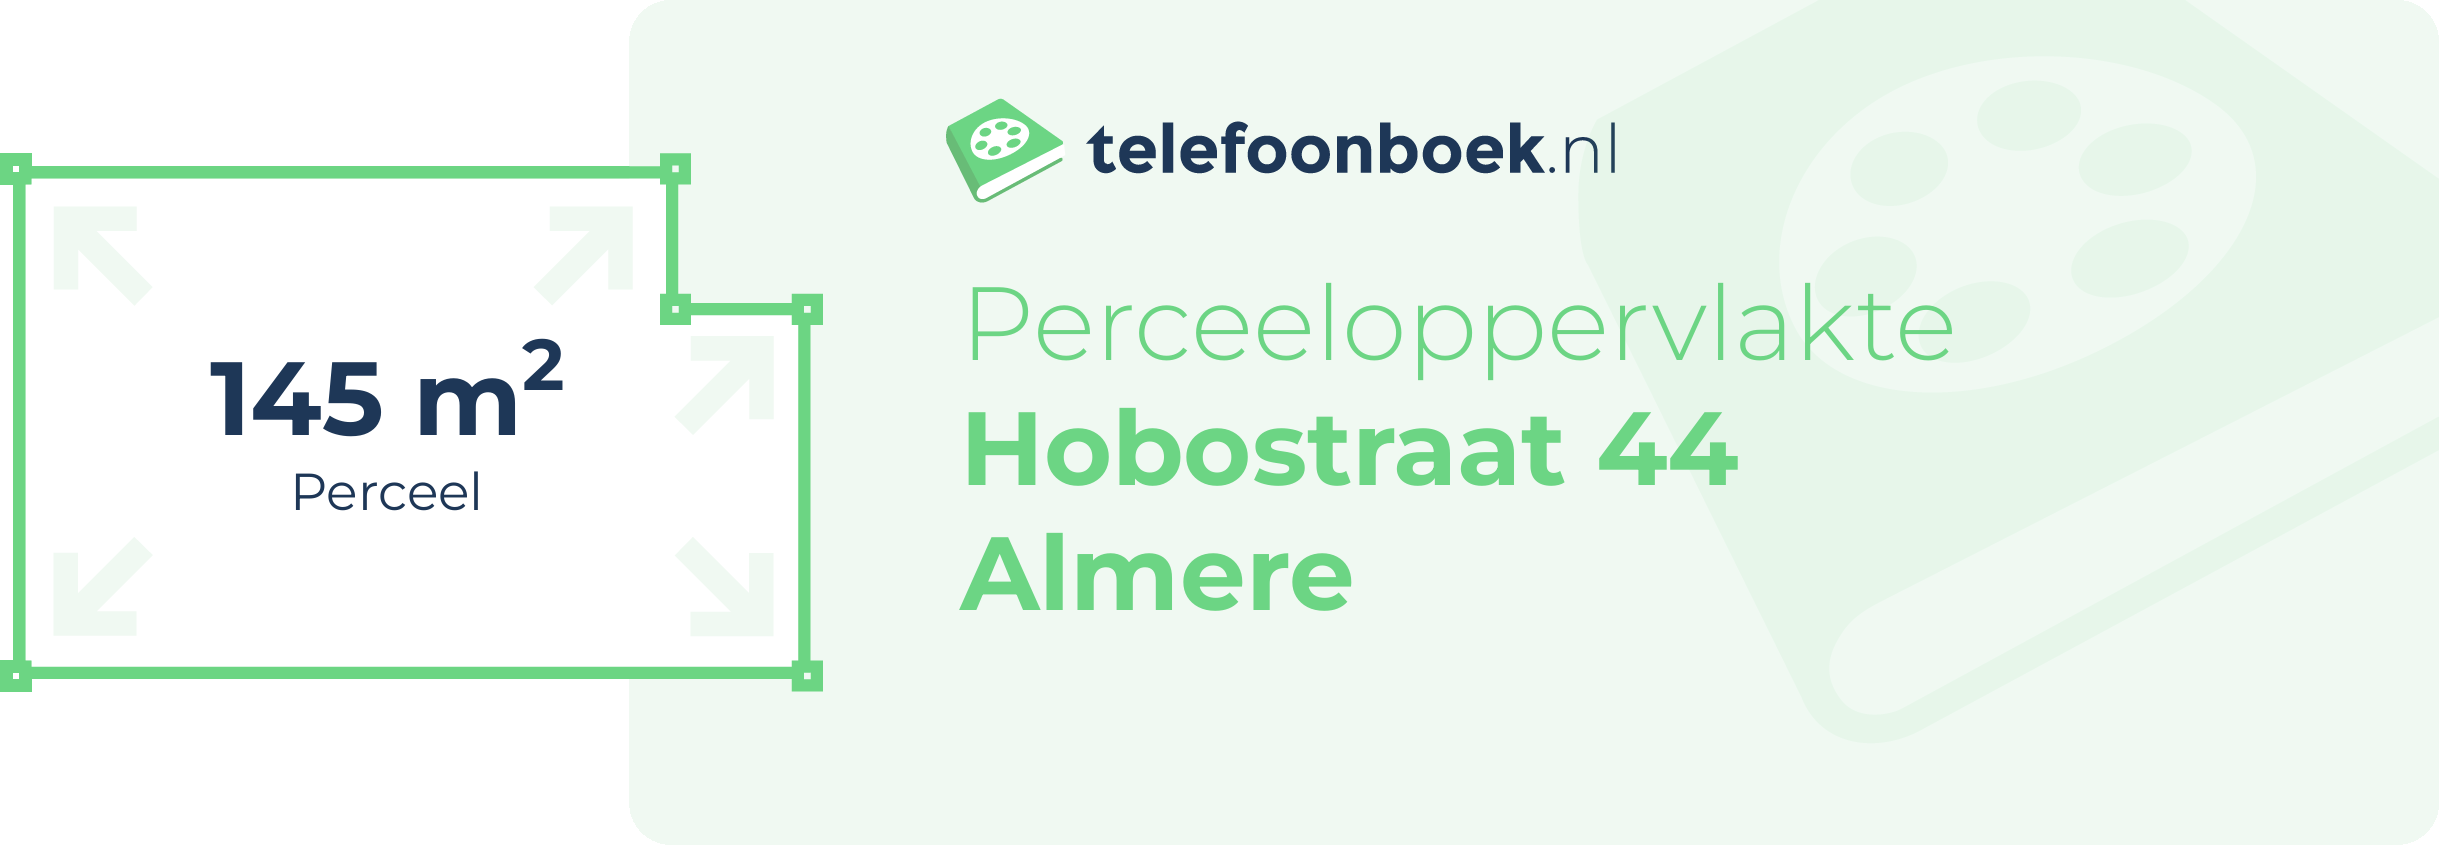 Perceeloppervlakte Hobostraat 44 Almere